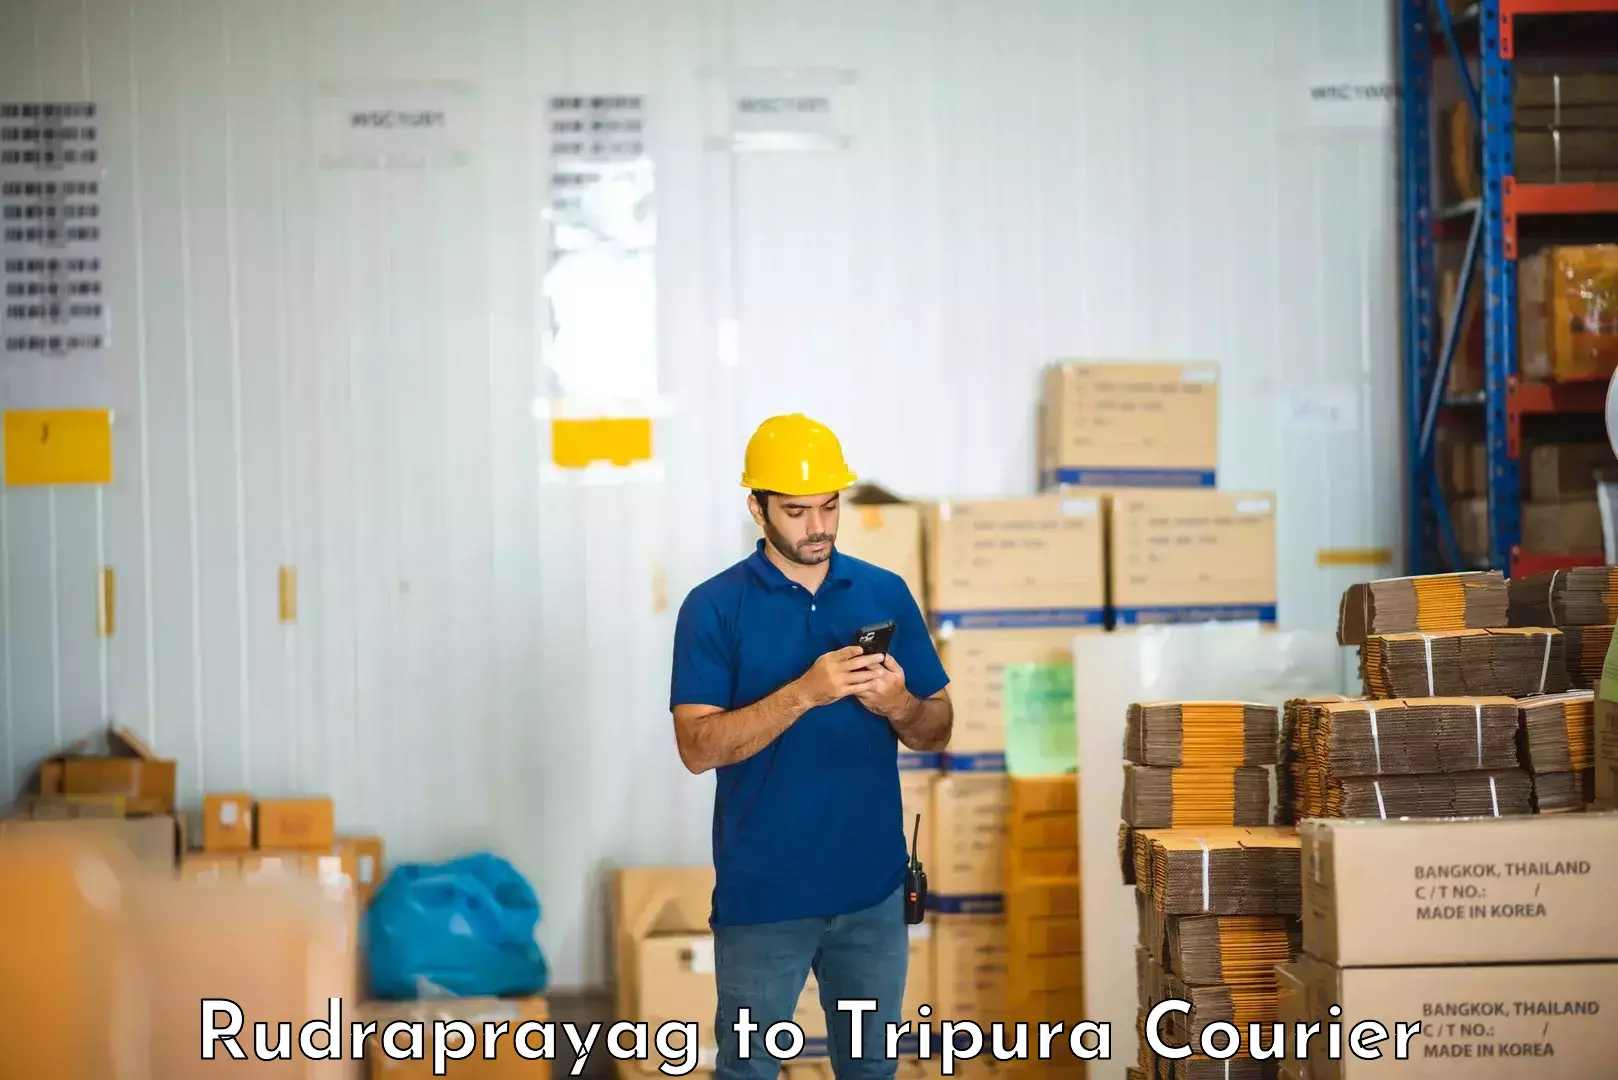 Seamless moving process Rudraprayag to Udaipur Tripura